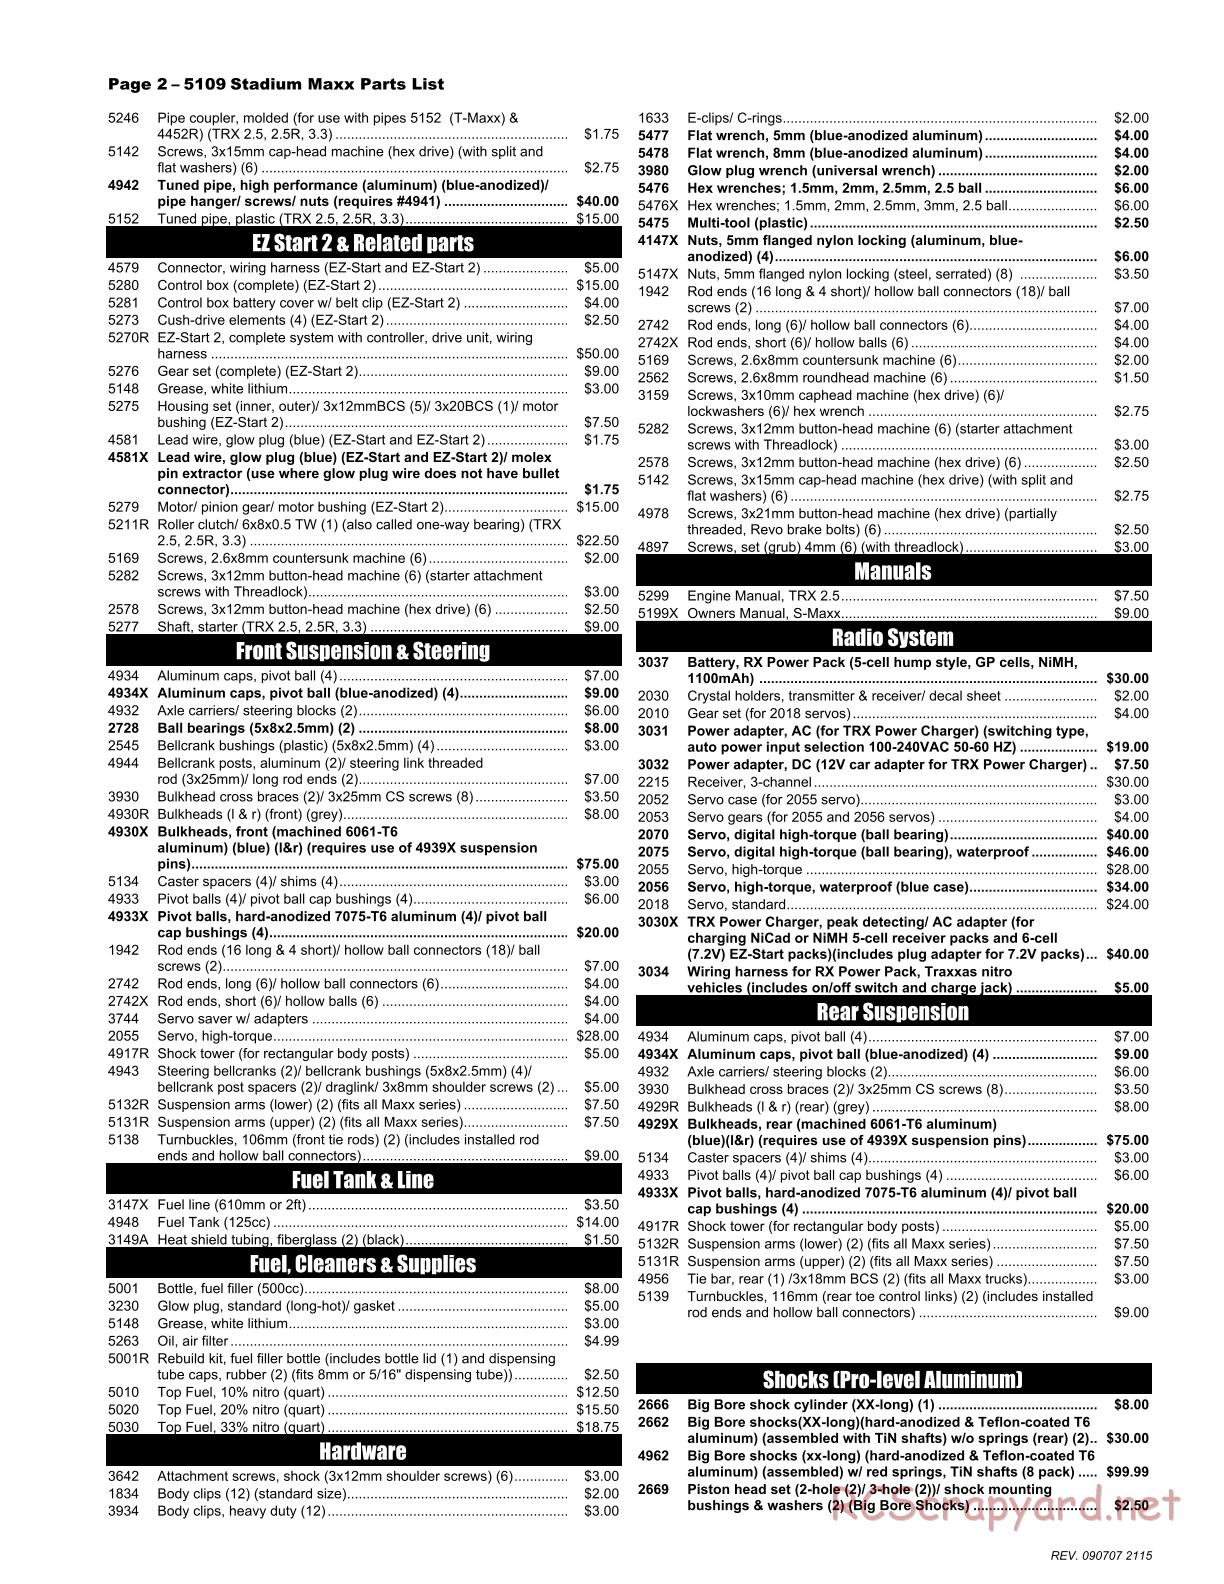 Traxxas - S-Maxx 2.5 (2004) - Parts List - Page 2